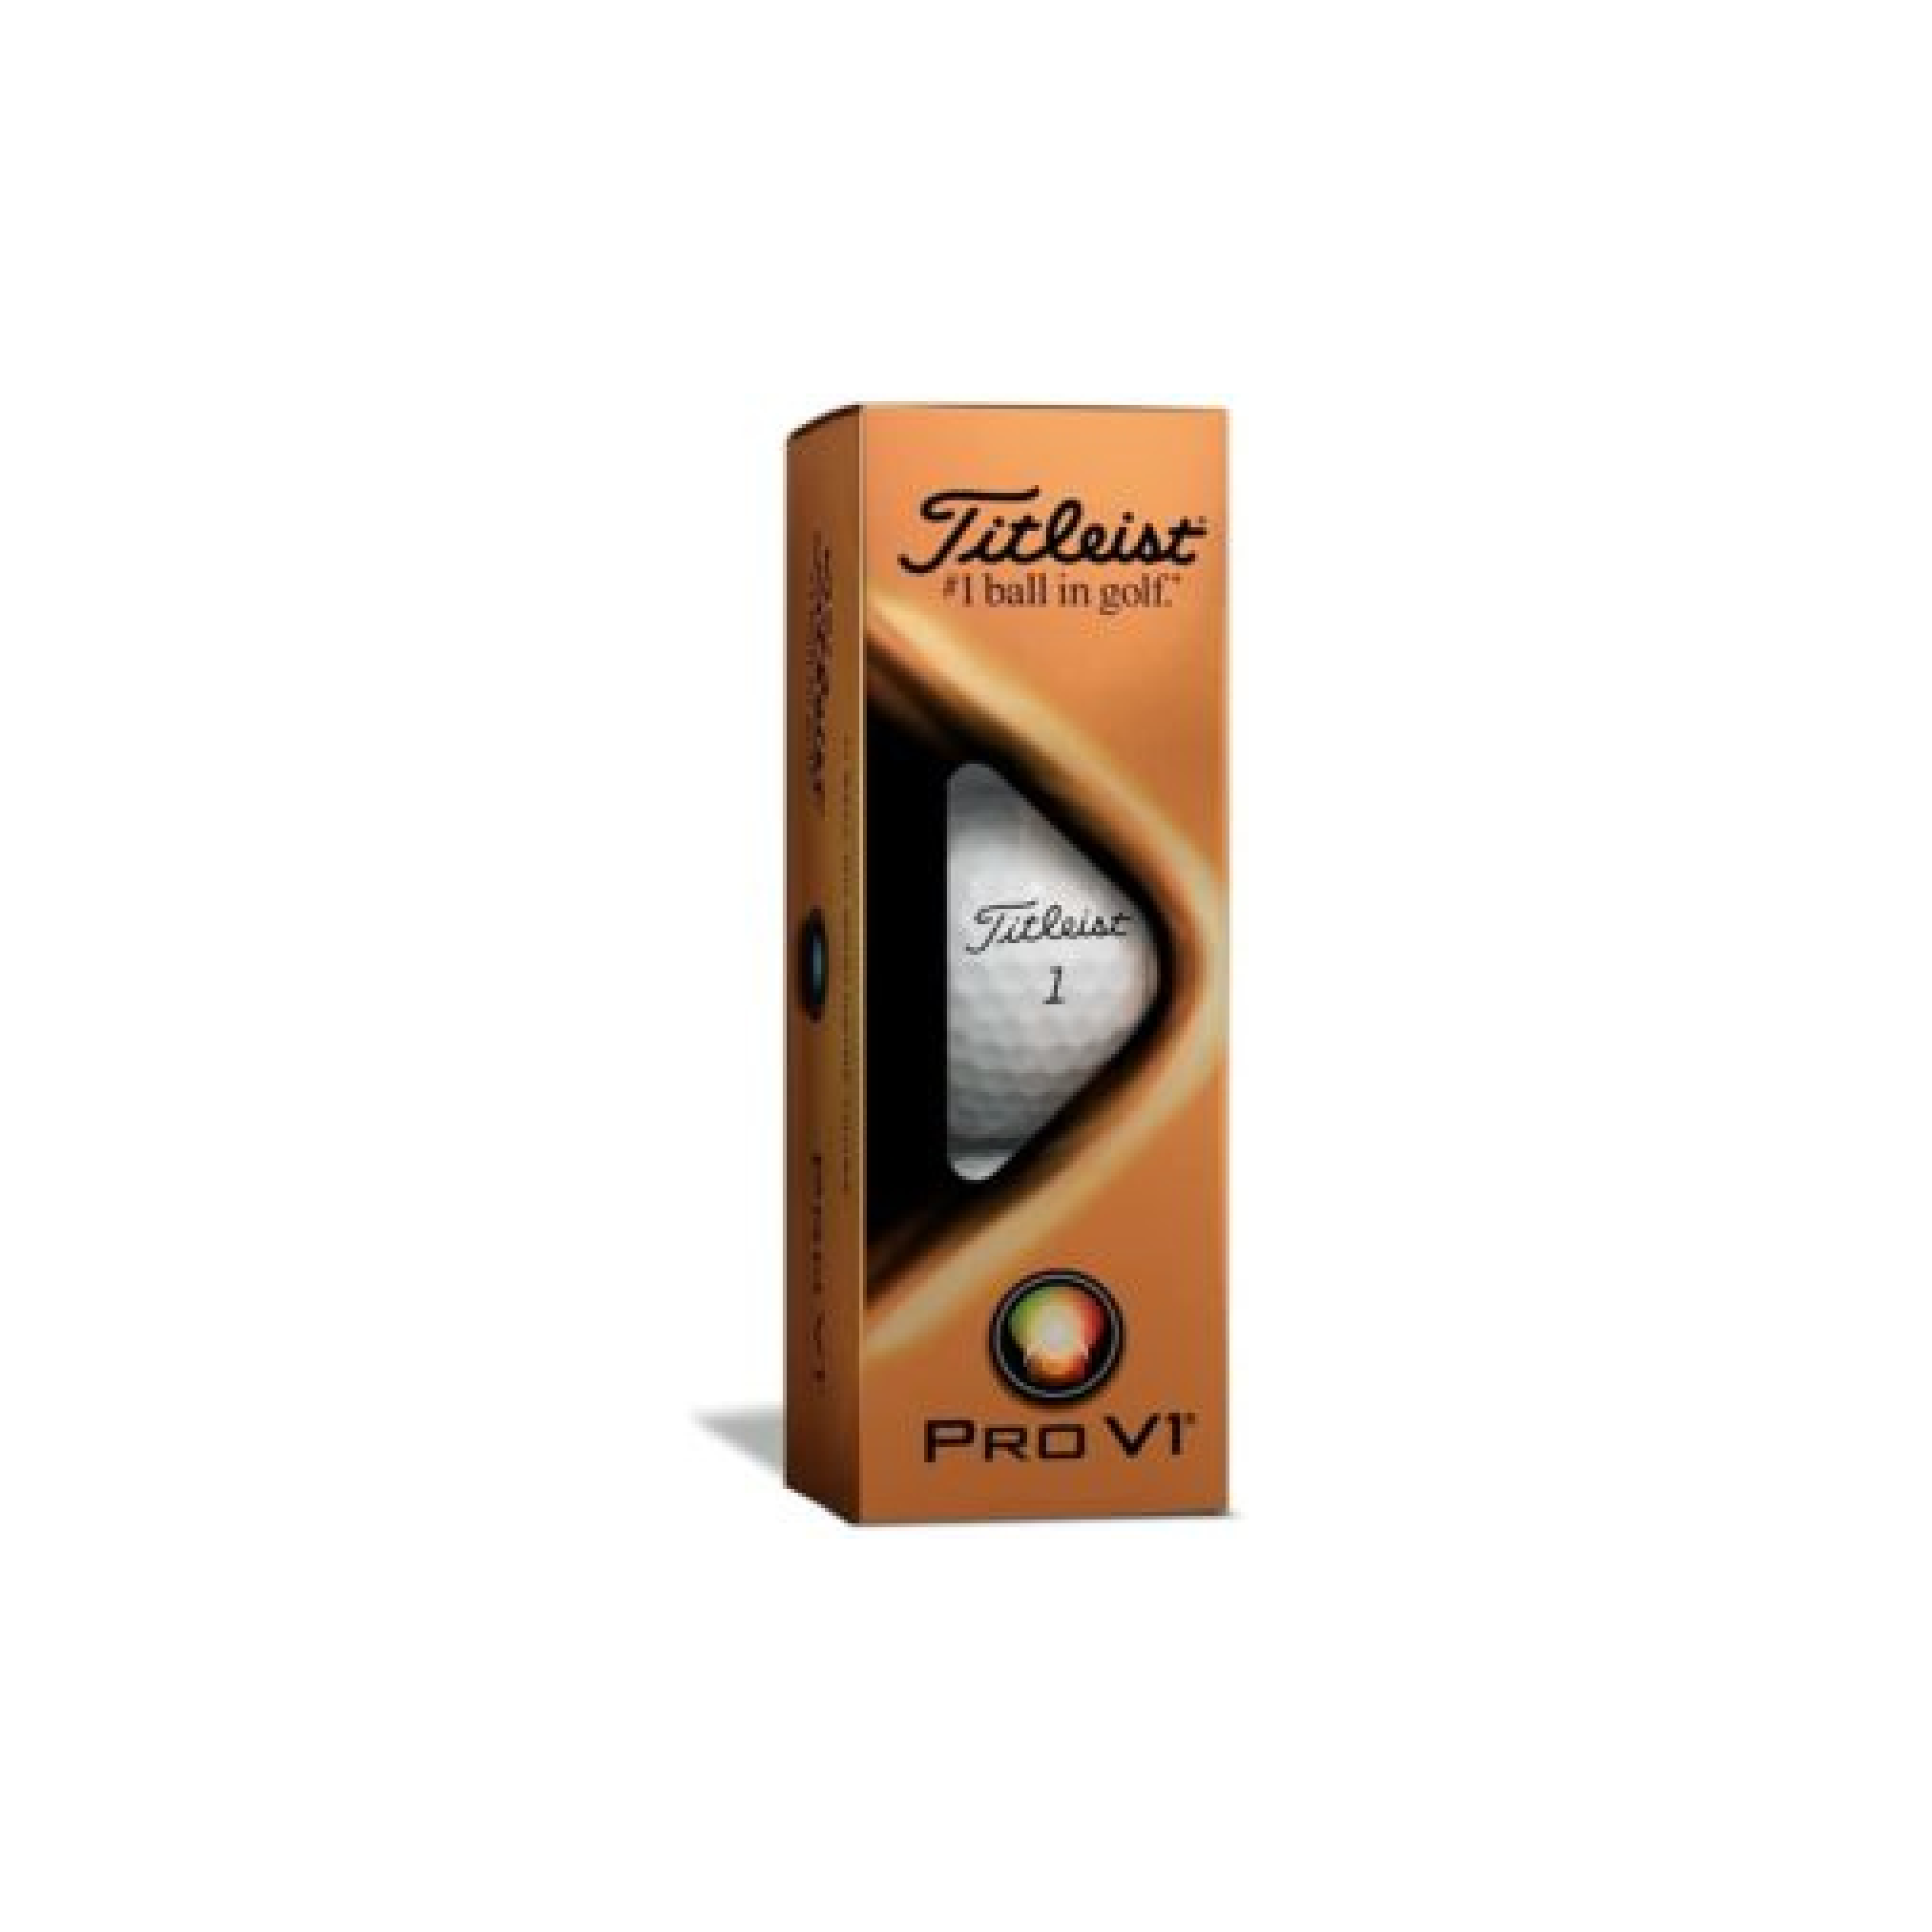 Titleist Pro V1 Golf Ball 3 Pack • Mercer Zimmerman Lighting and Controls